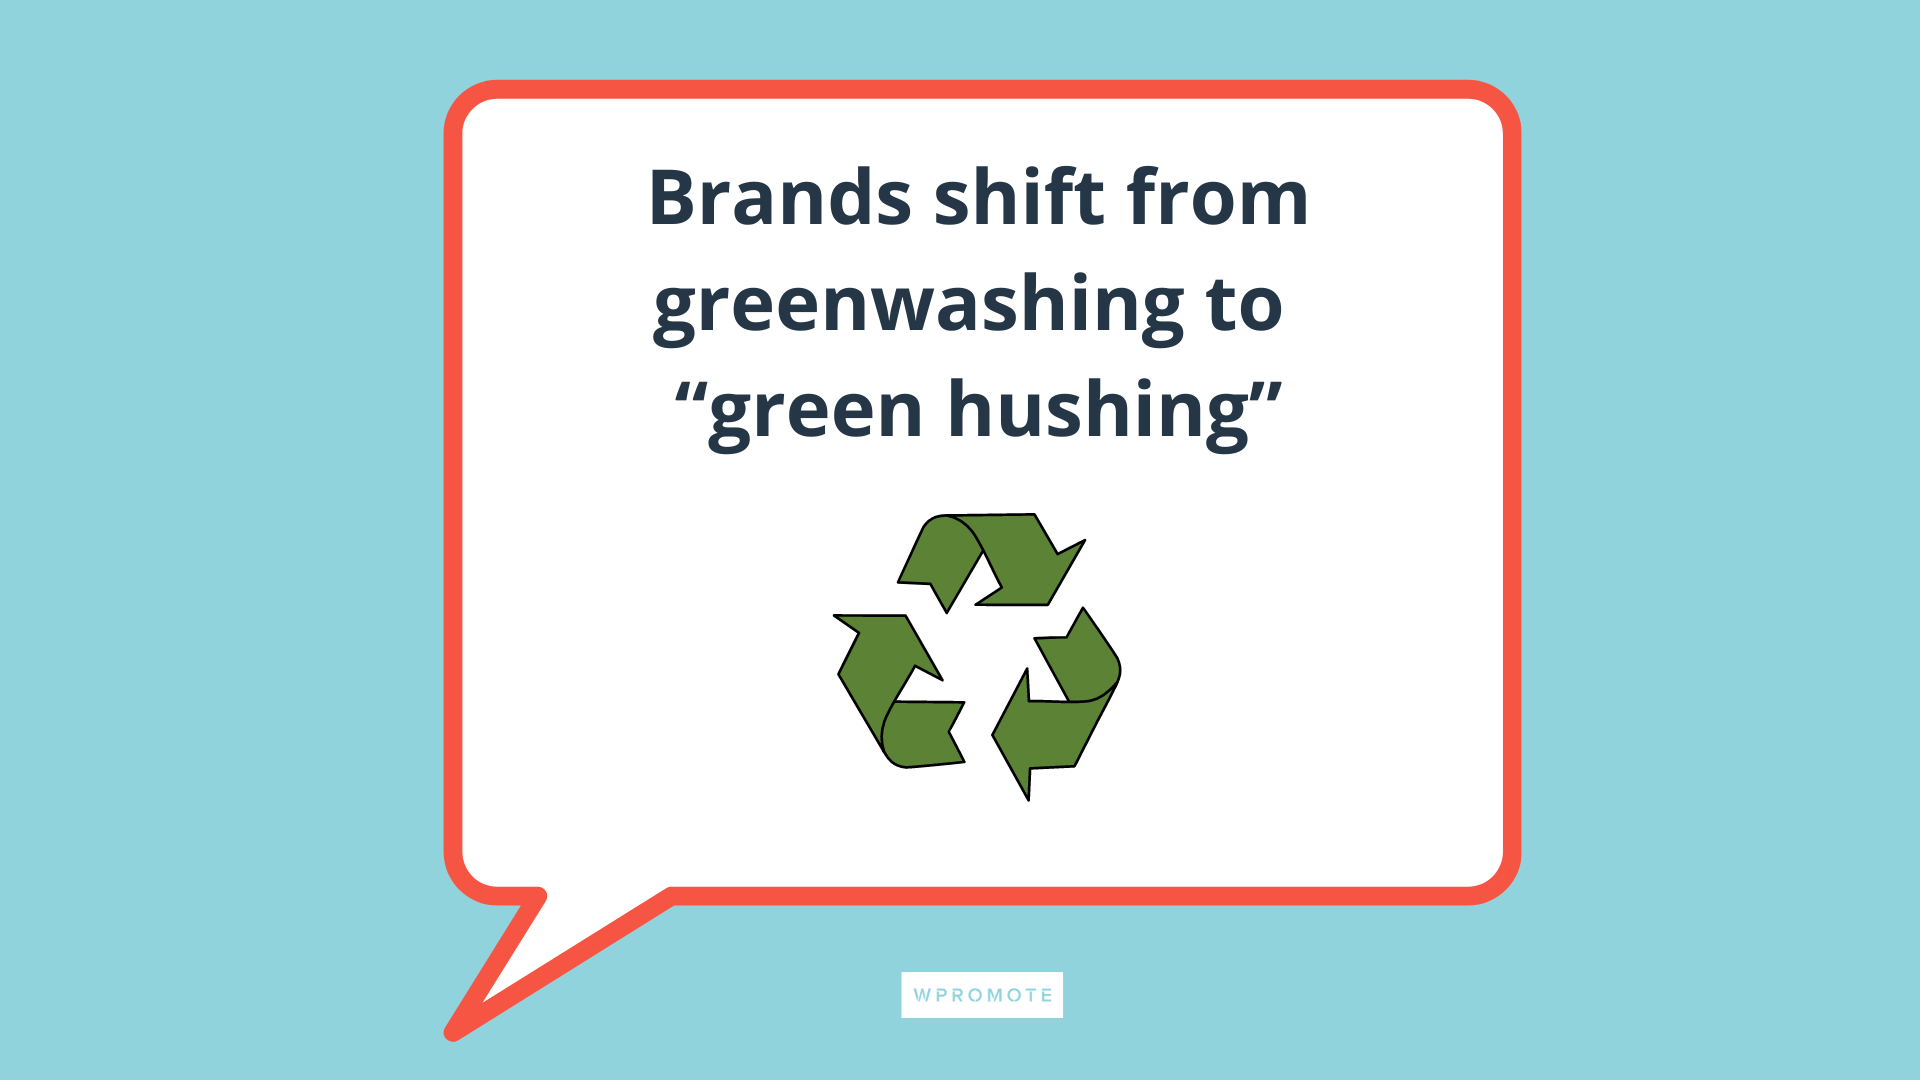 Brands shift from greenwashing to green hushing